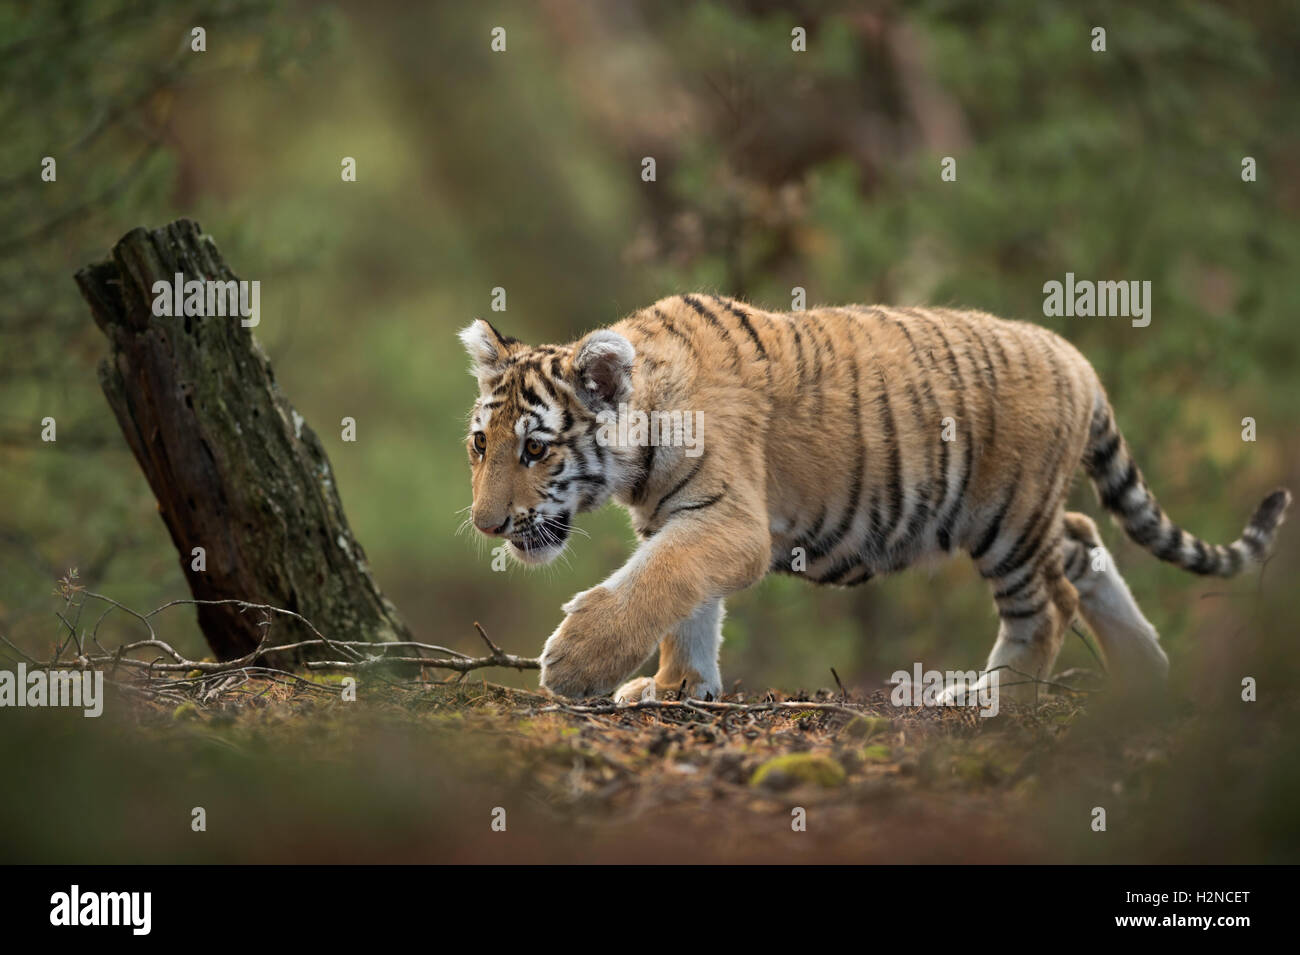 Royal Bengal Tiger / Koenigstiger ( Panthera tigris ), natural morph, cute young animal, sneaking through the woods. Stock Photo